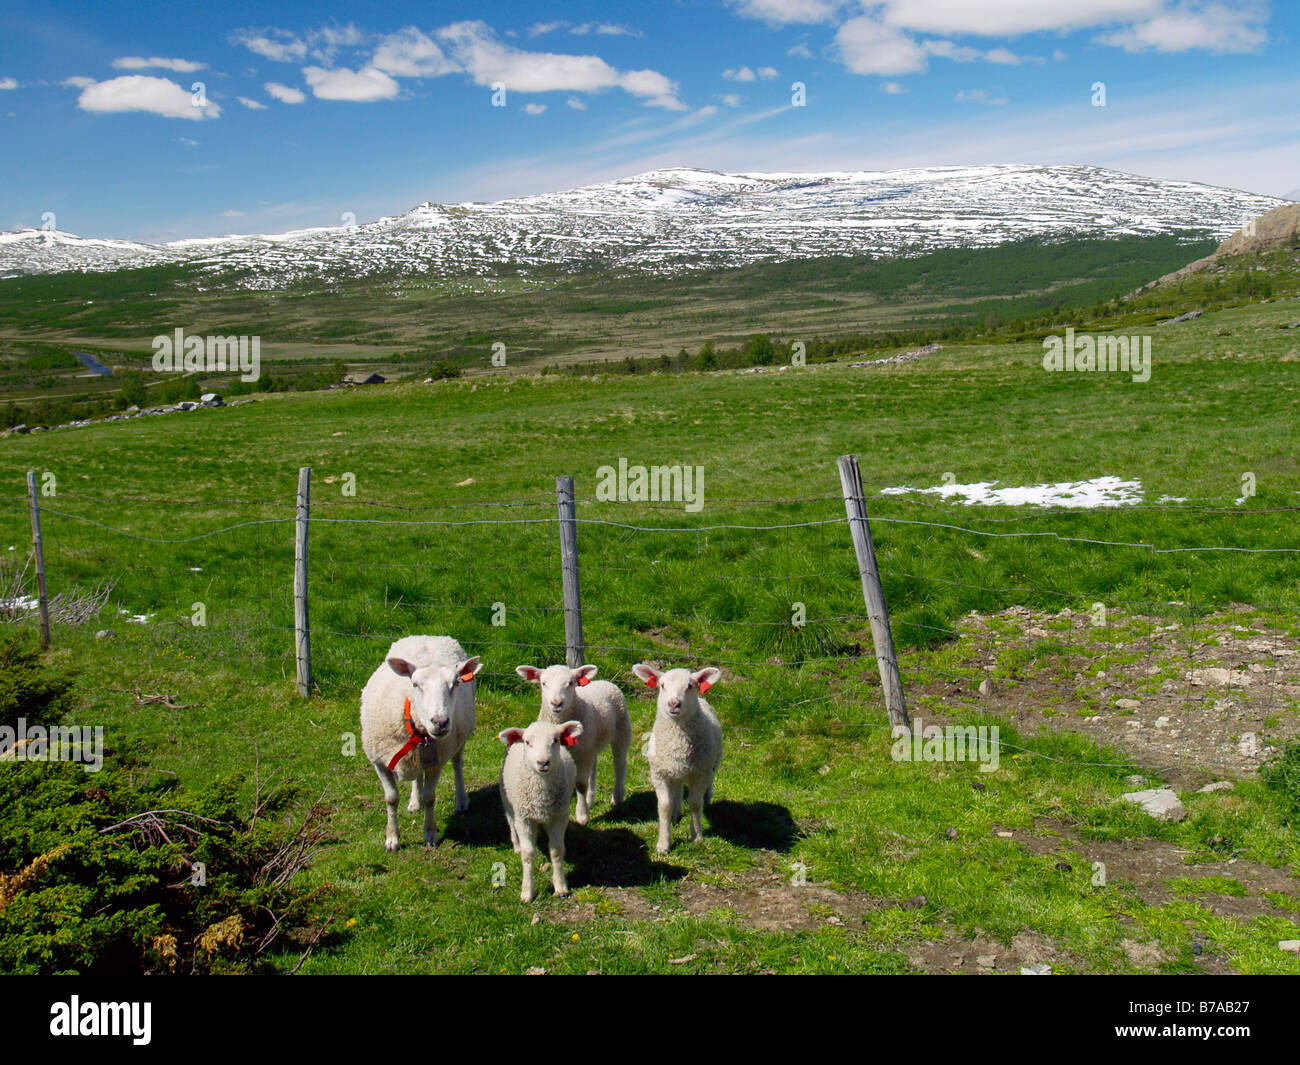 Sheep (Ovis aries), in Tollevshaugen, Grimsdalen Valley, Dovre National Park, Norway, Scandinavia, Northern Europe Stock Photo